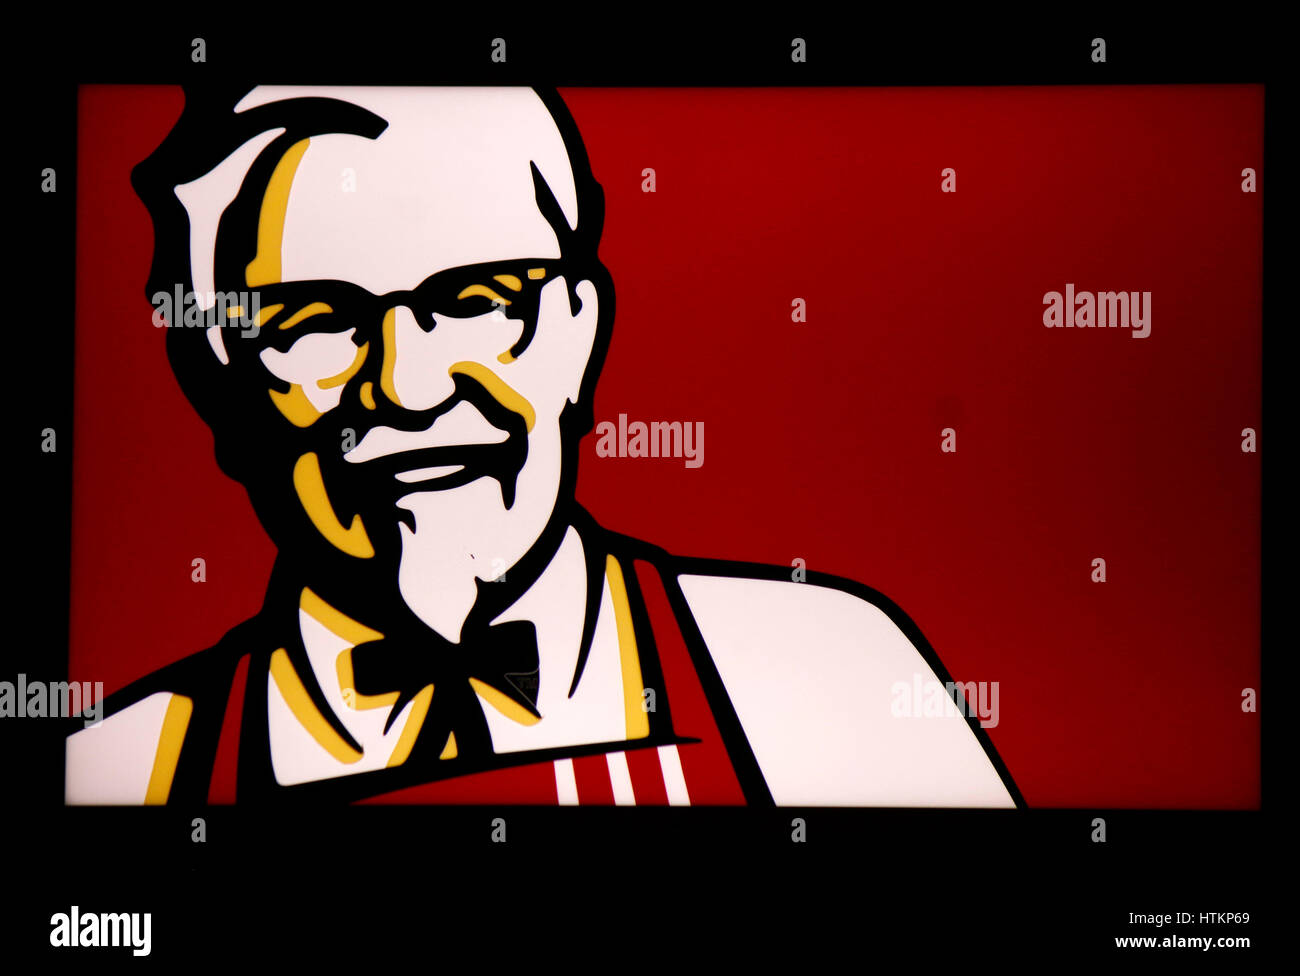 das Logo der Marke/ the logo of the brand "KFC Kentucky Fried Chicken", Berlin. Stock Photo